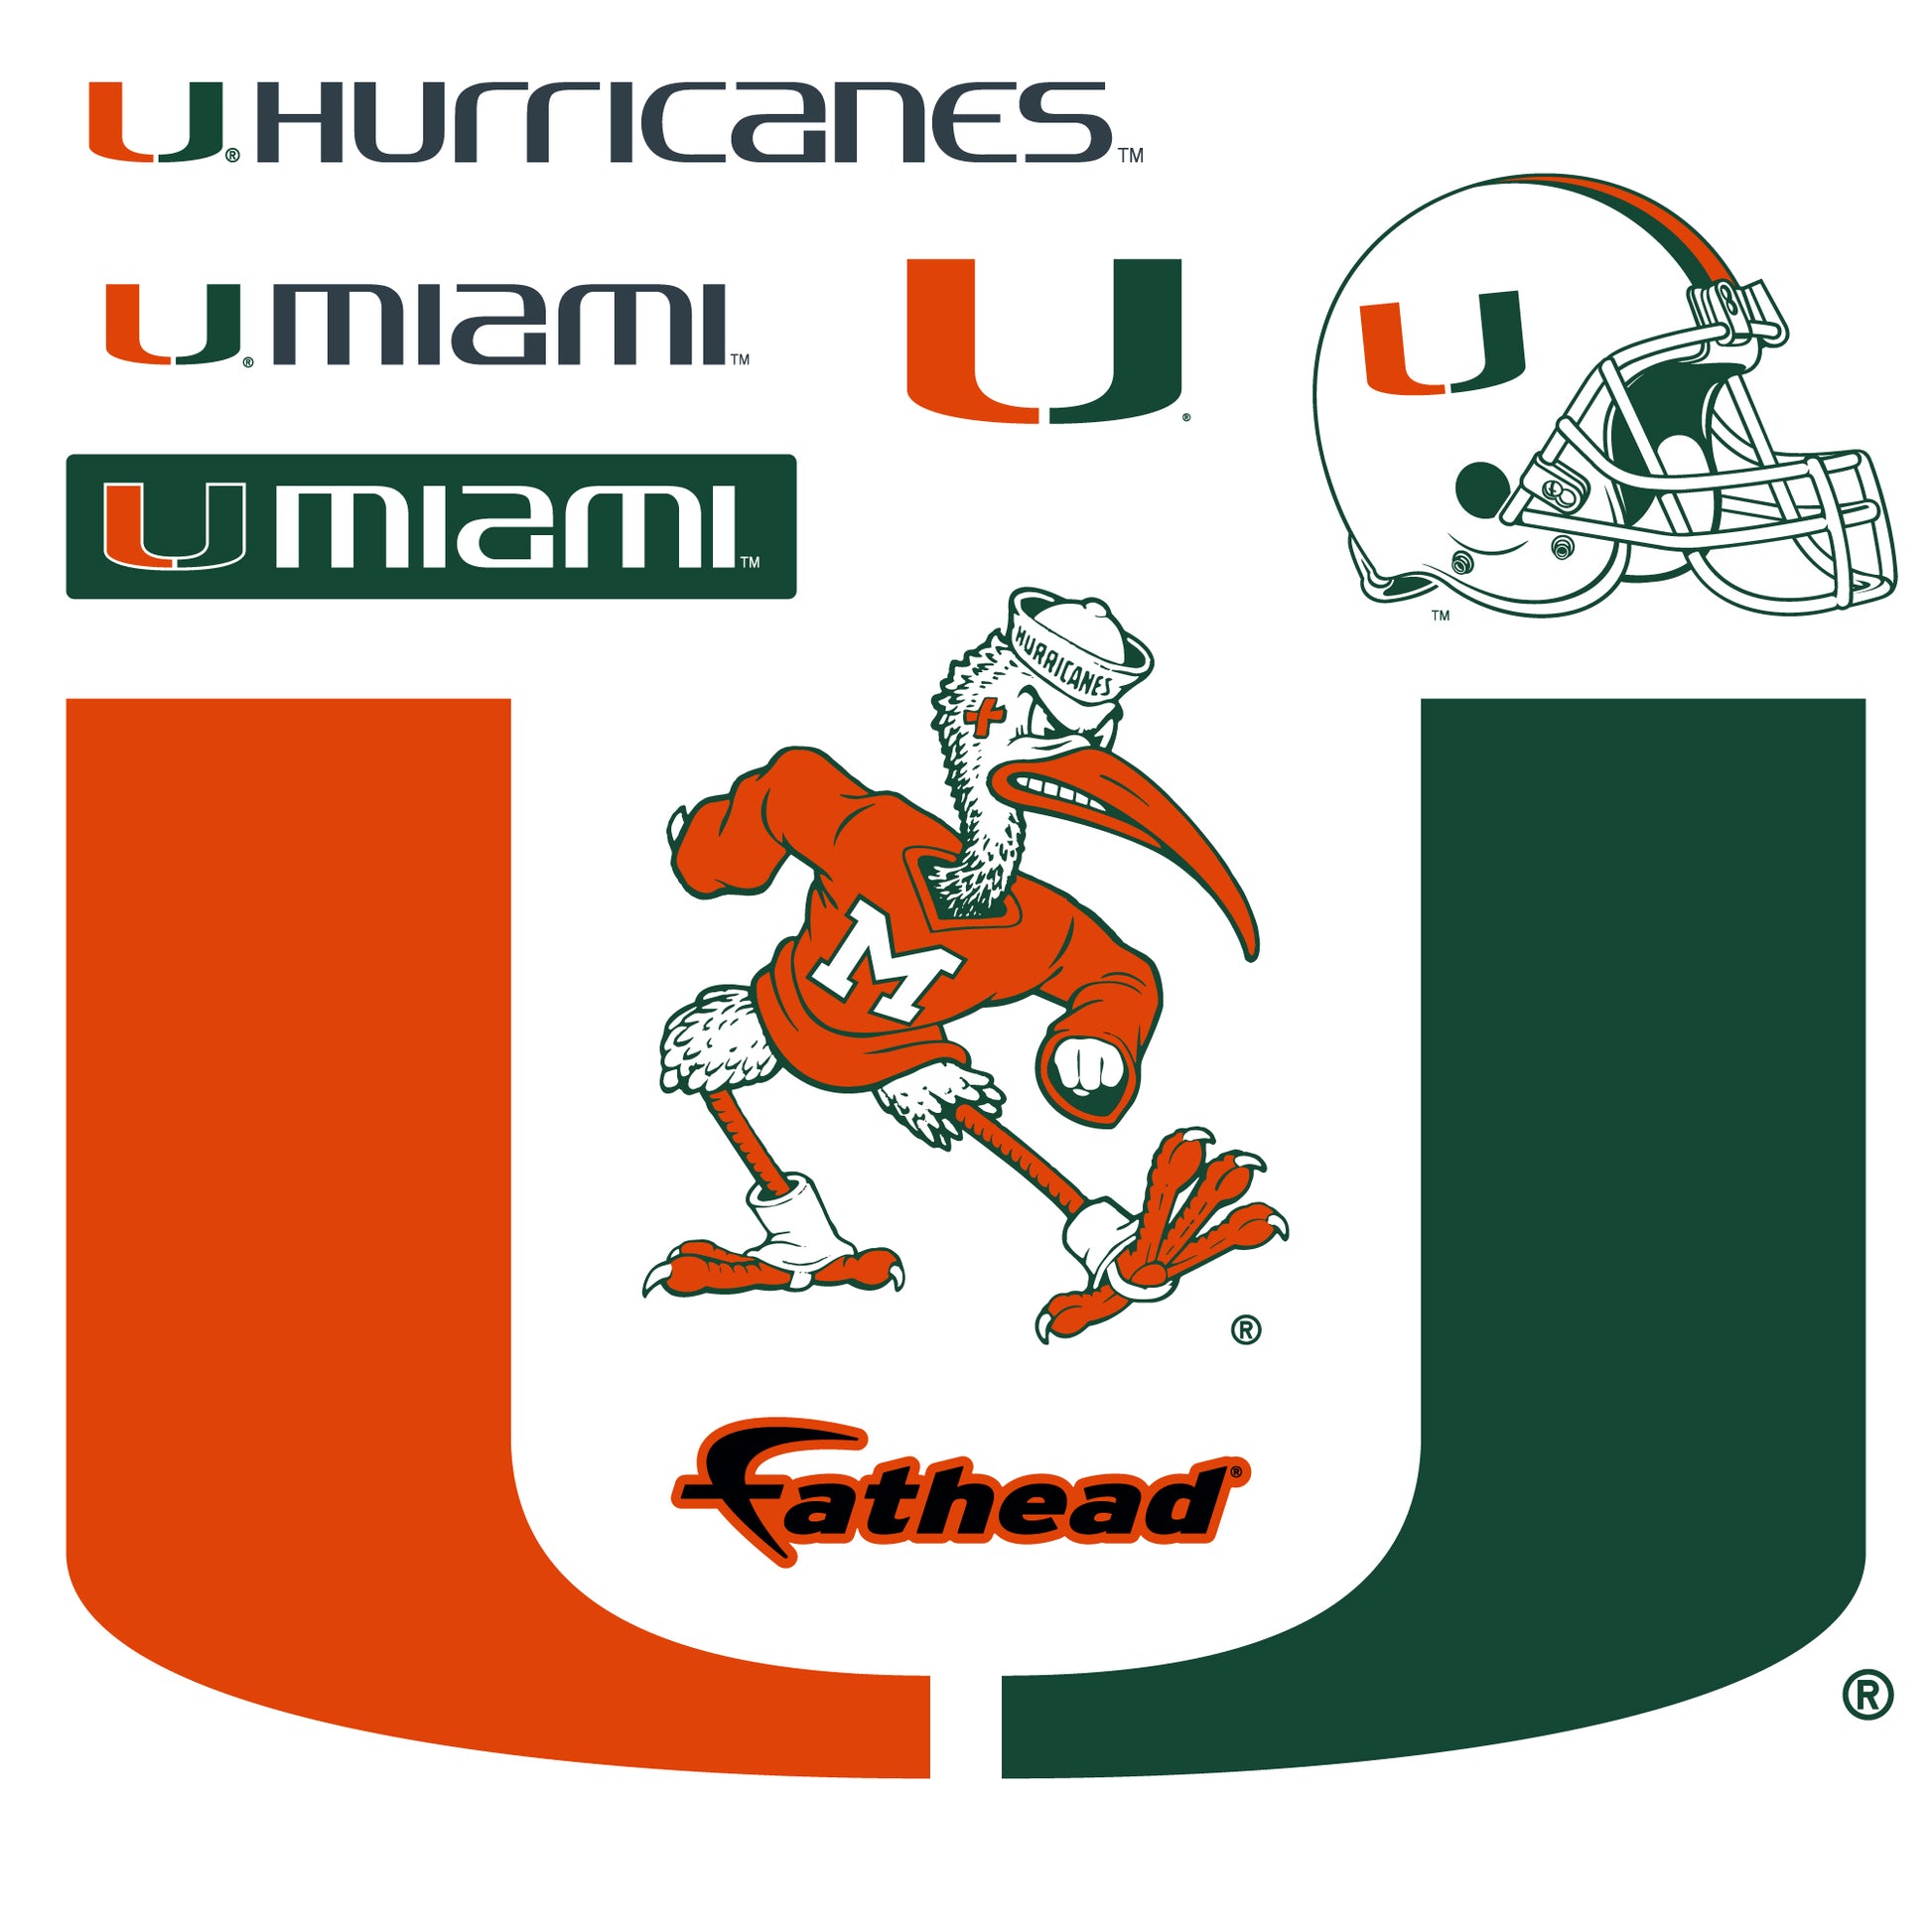 miami hurricanes football logo